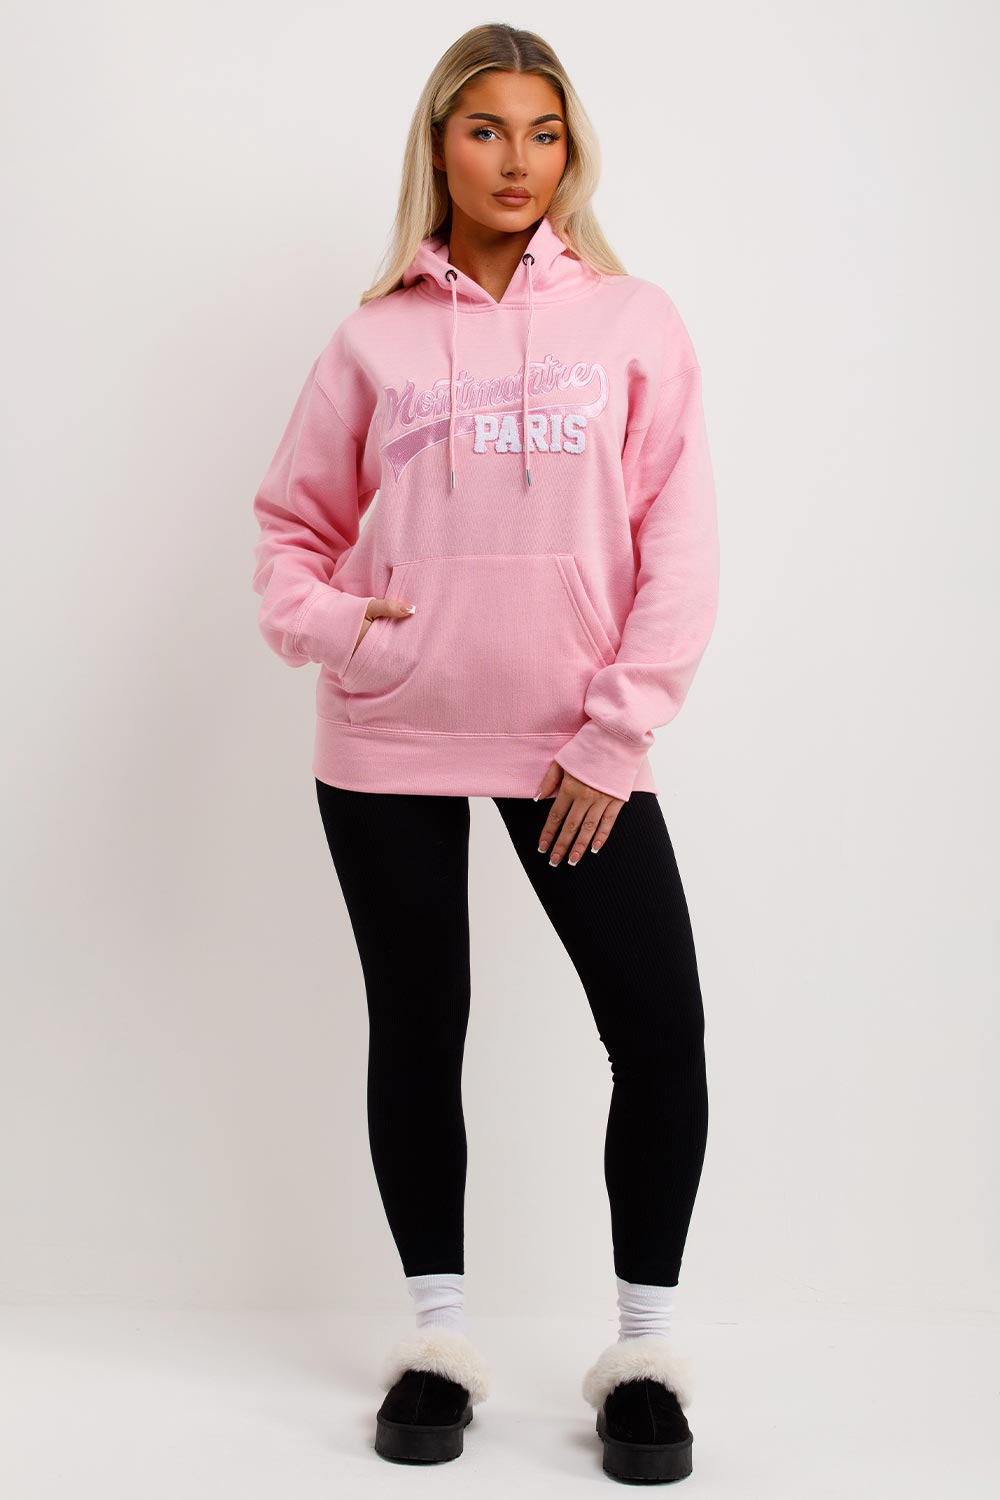 womens pink hoodie montmartre paris embroidery